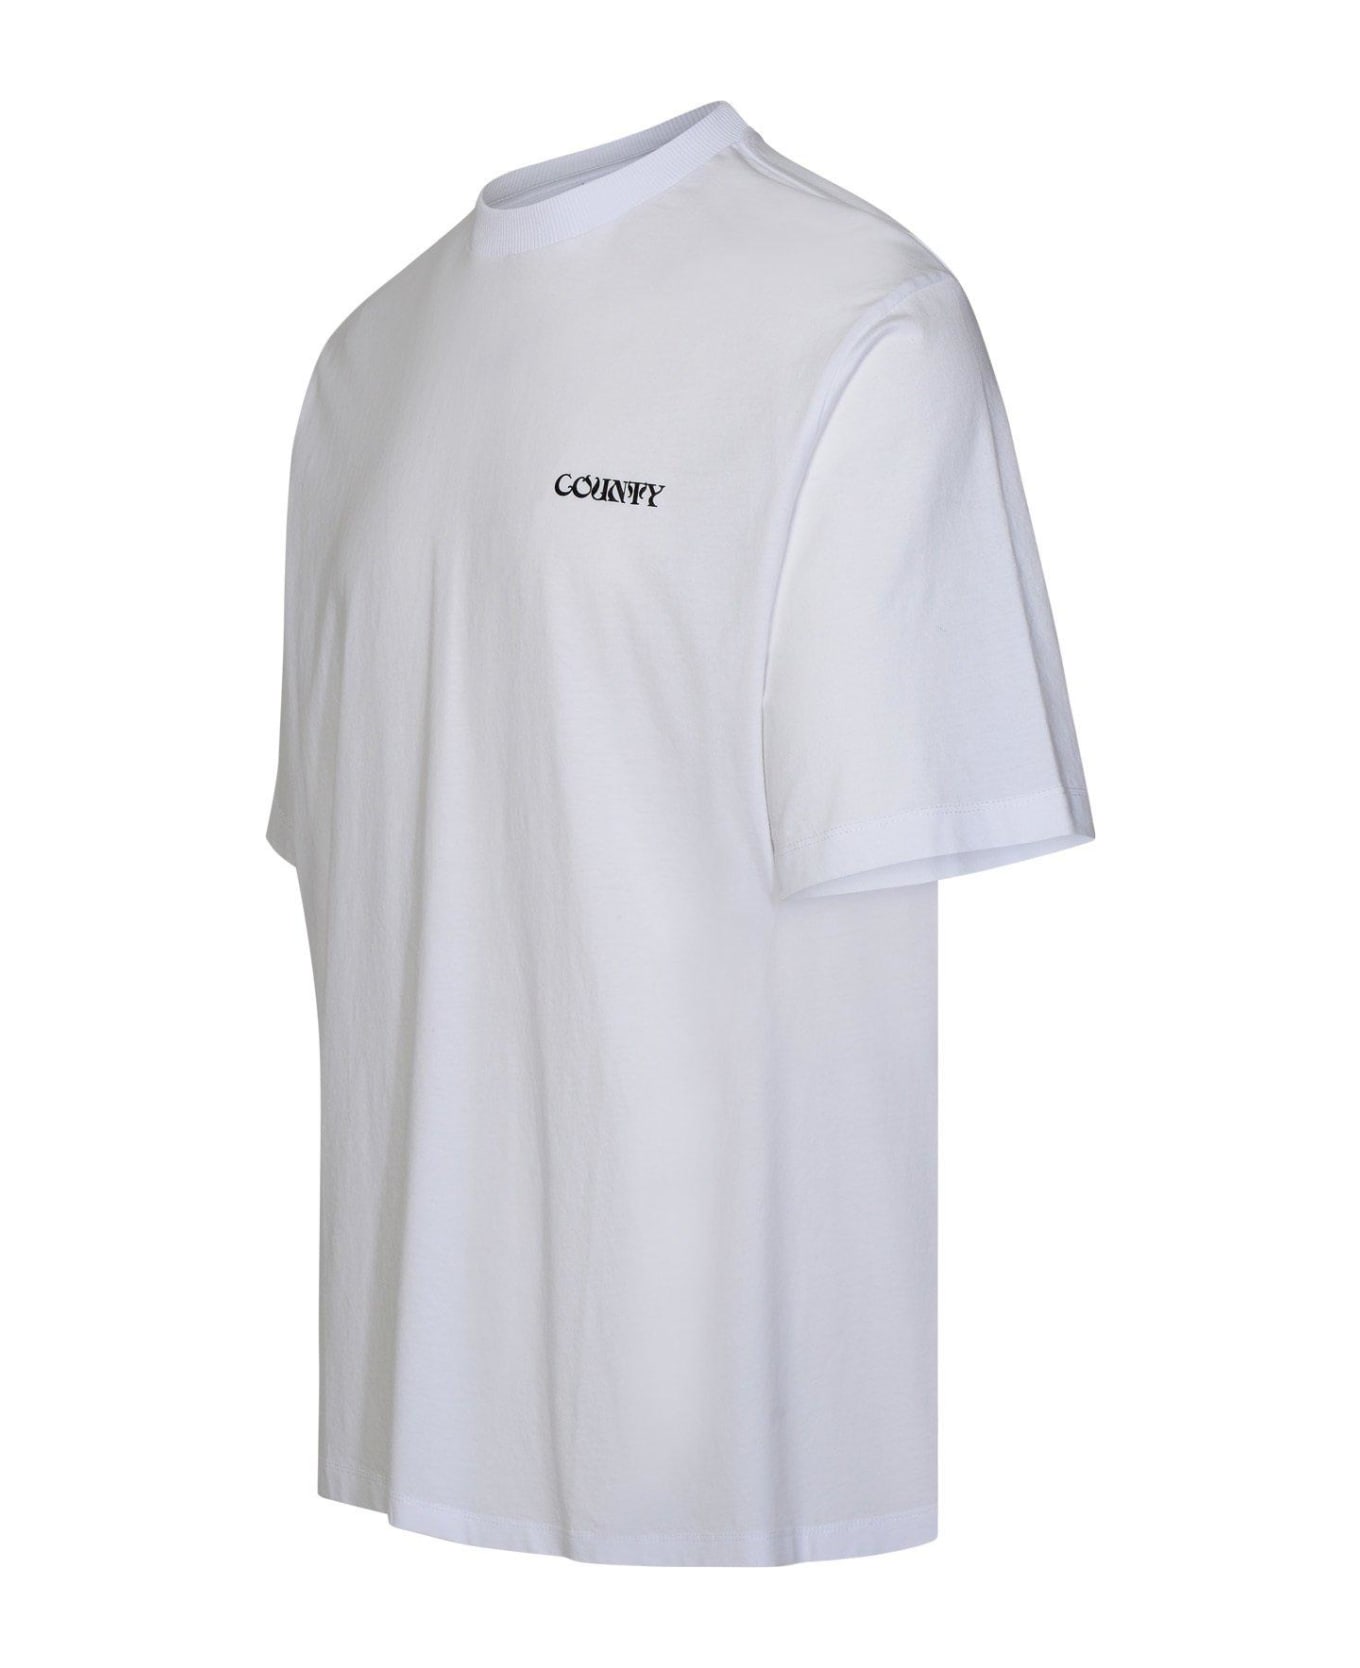 Marcelo Burlon County Printed Crewneck T-shirt - Bianco